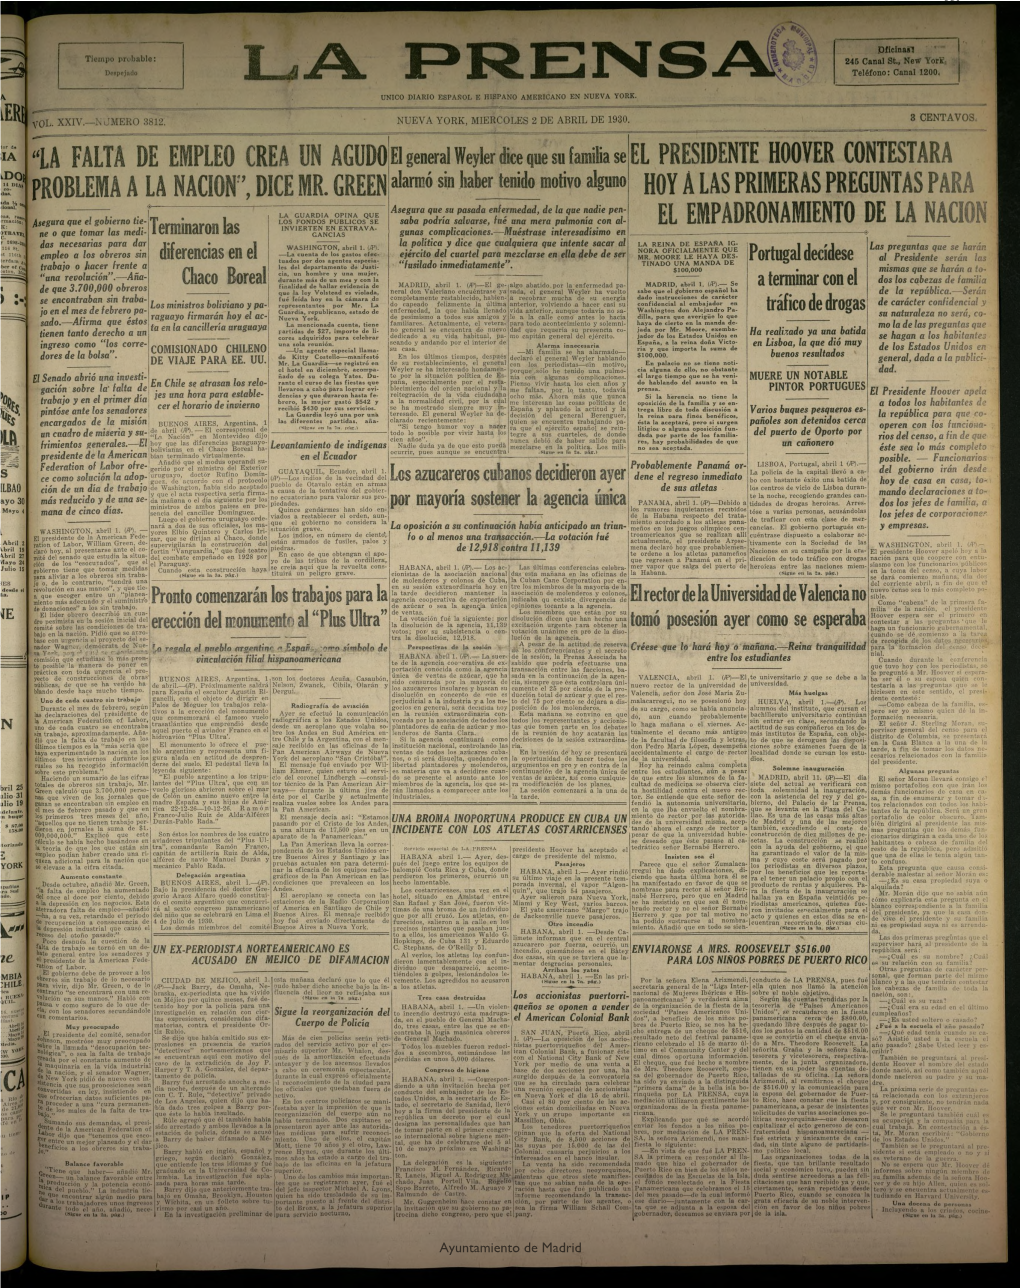 La Prensa: Único Diario Español E Hispano Americano En Nueva York, De 2 De Abril De 1930, Nº3812